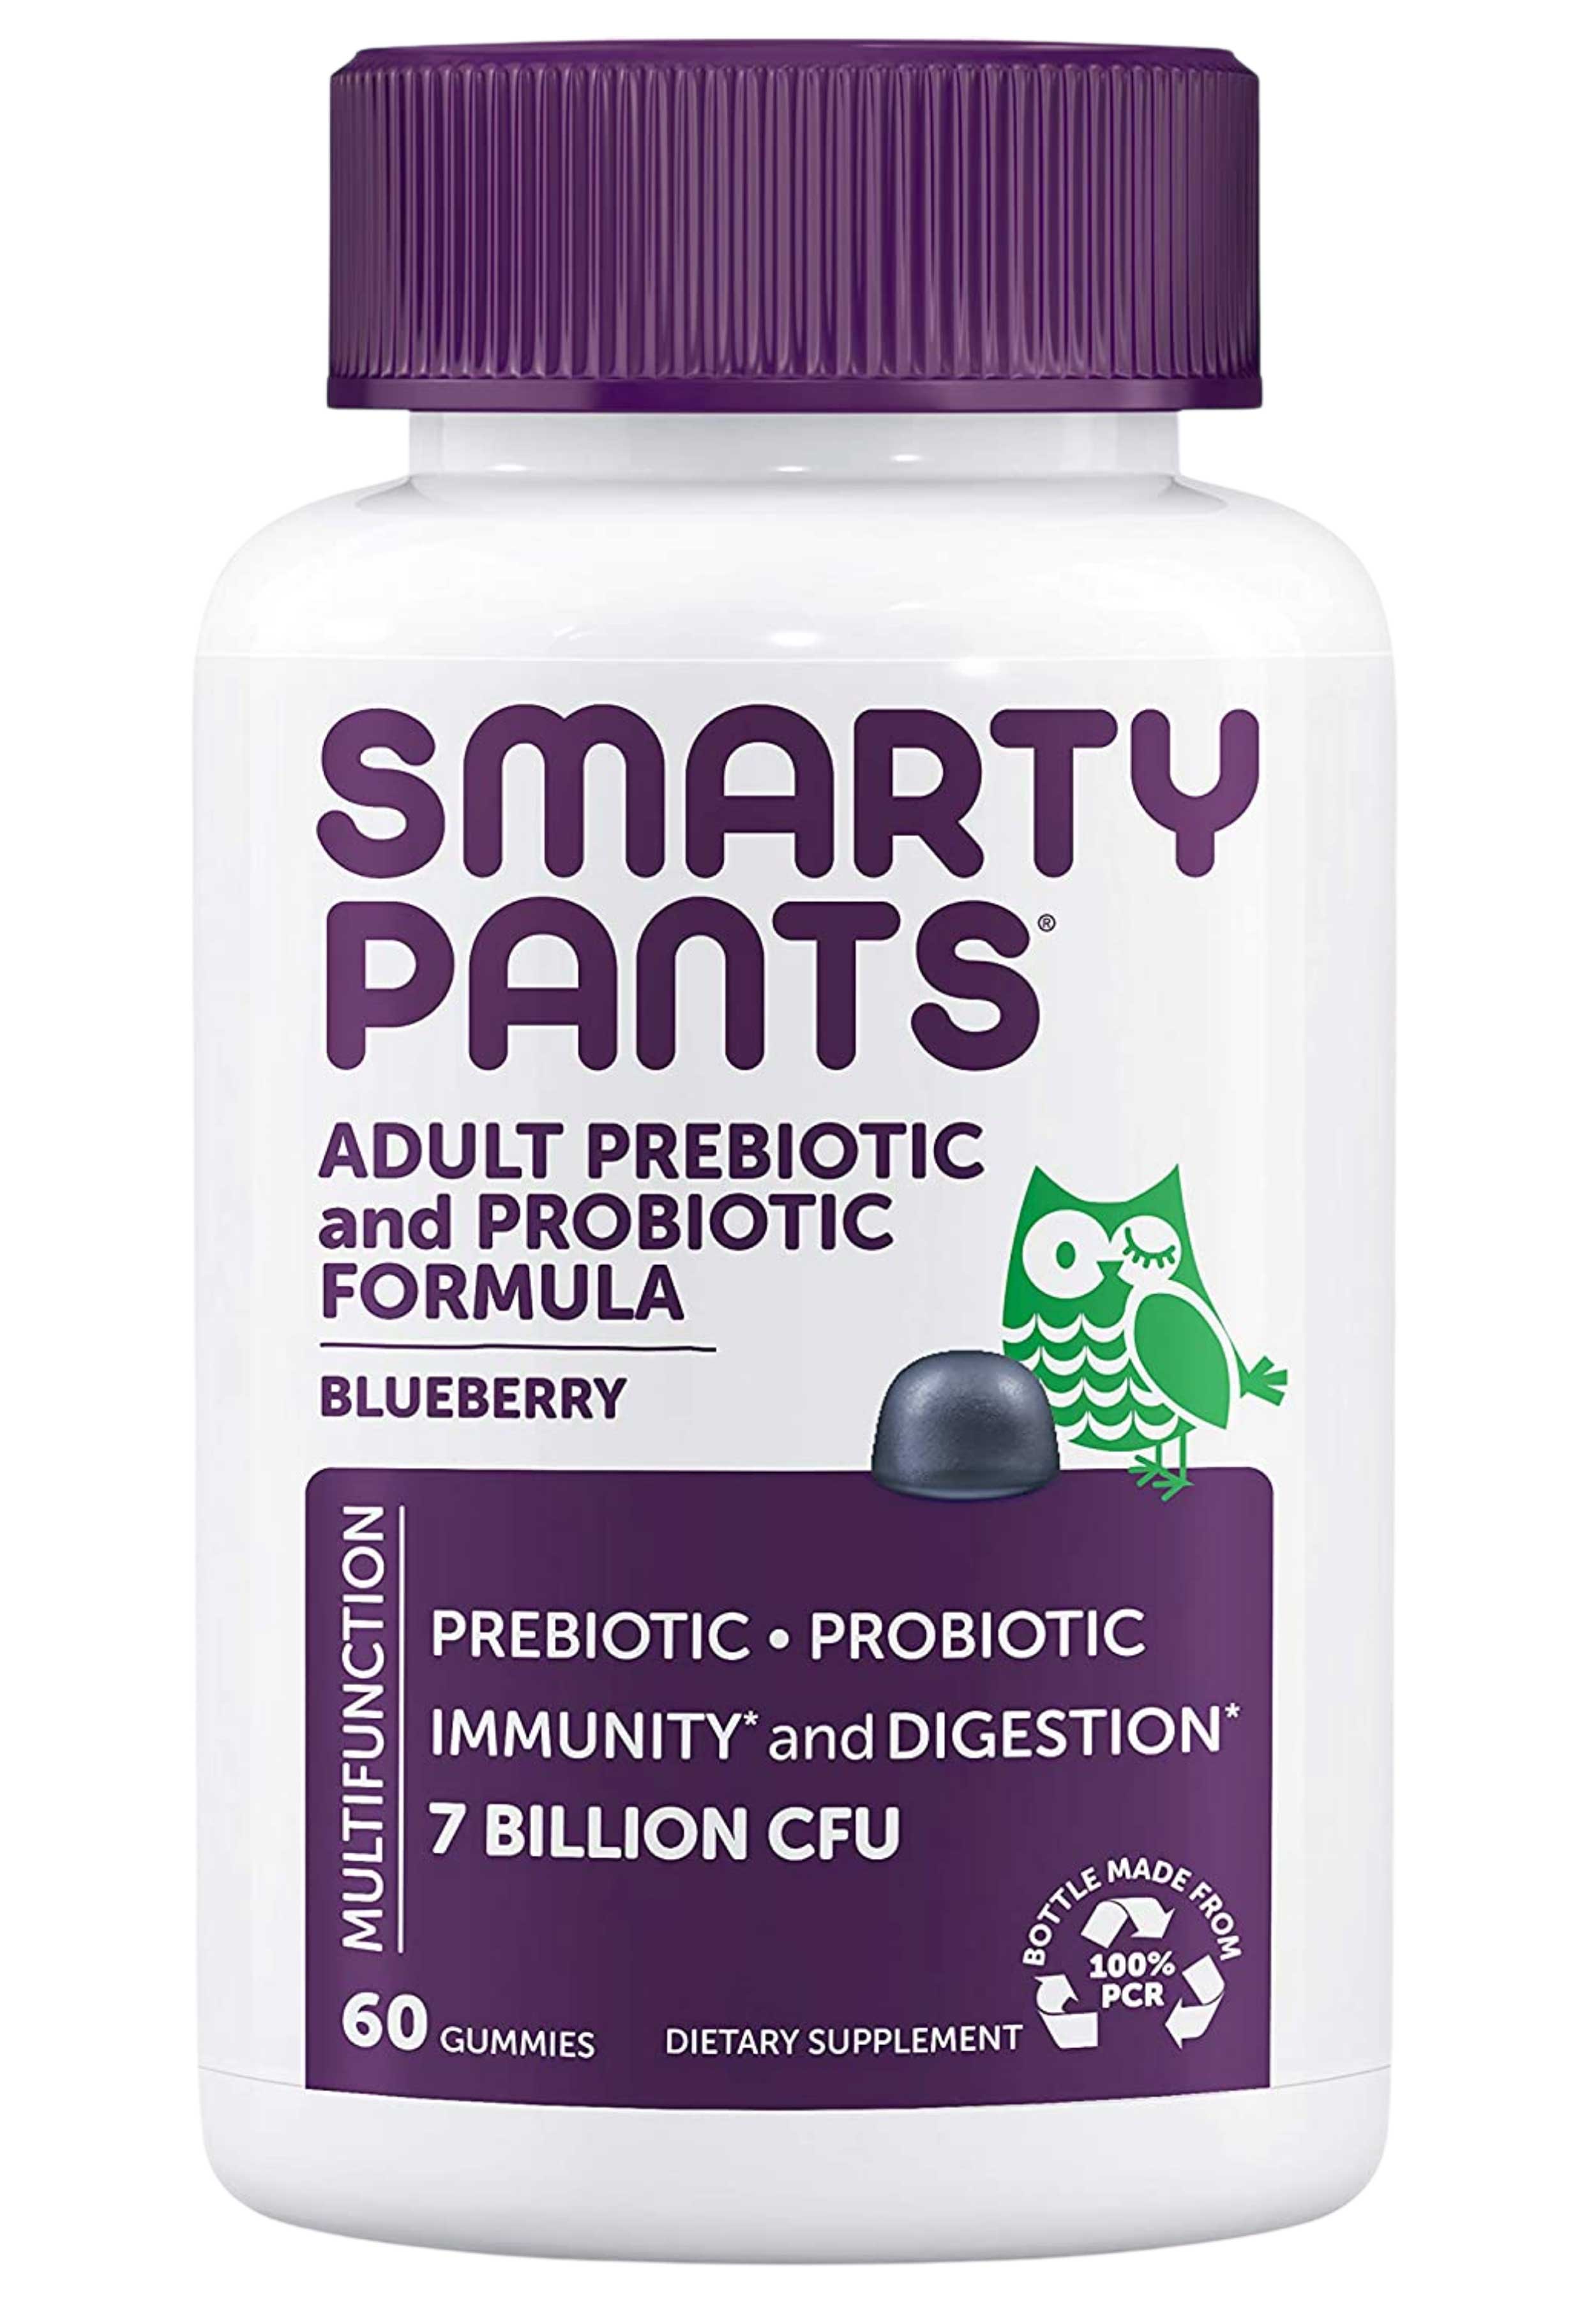 SmartyPants Adult Probiotic, Prebiotic Blueberry